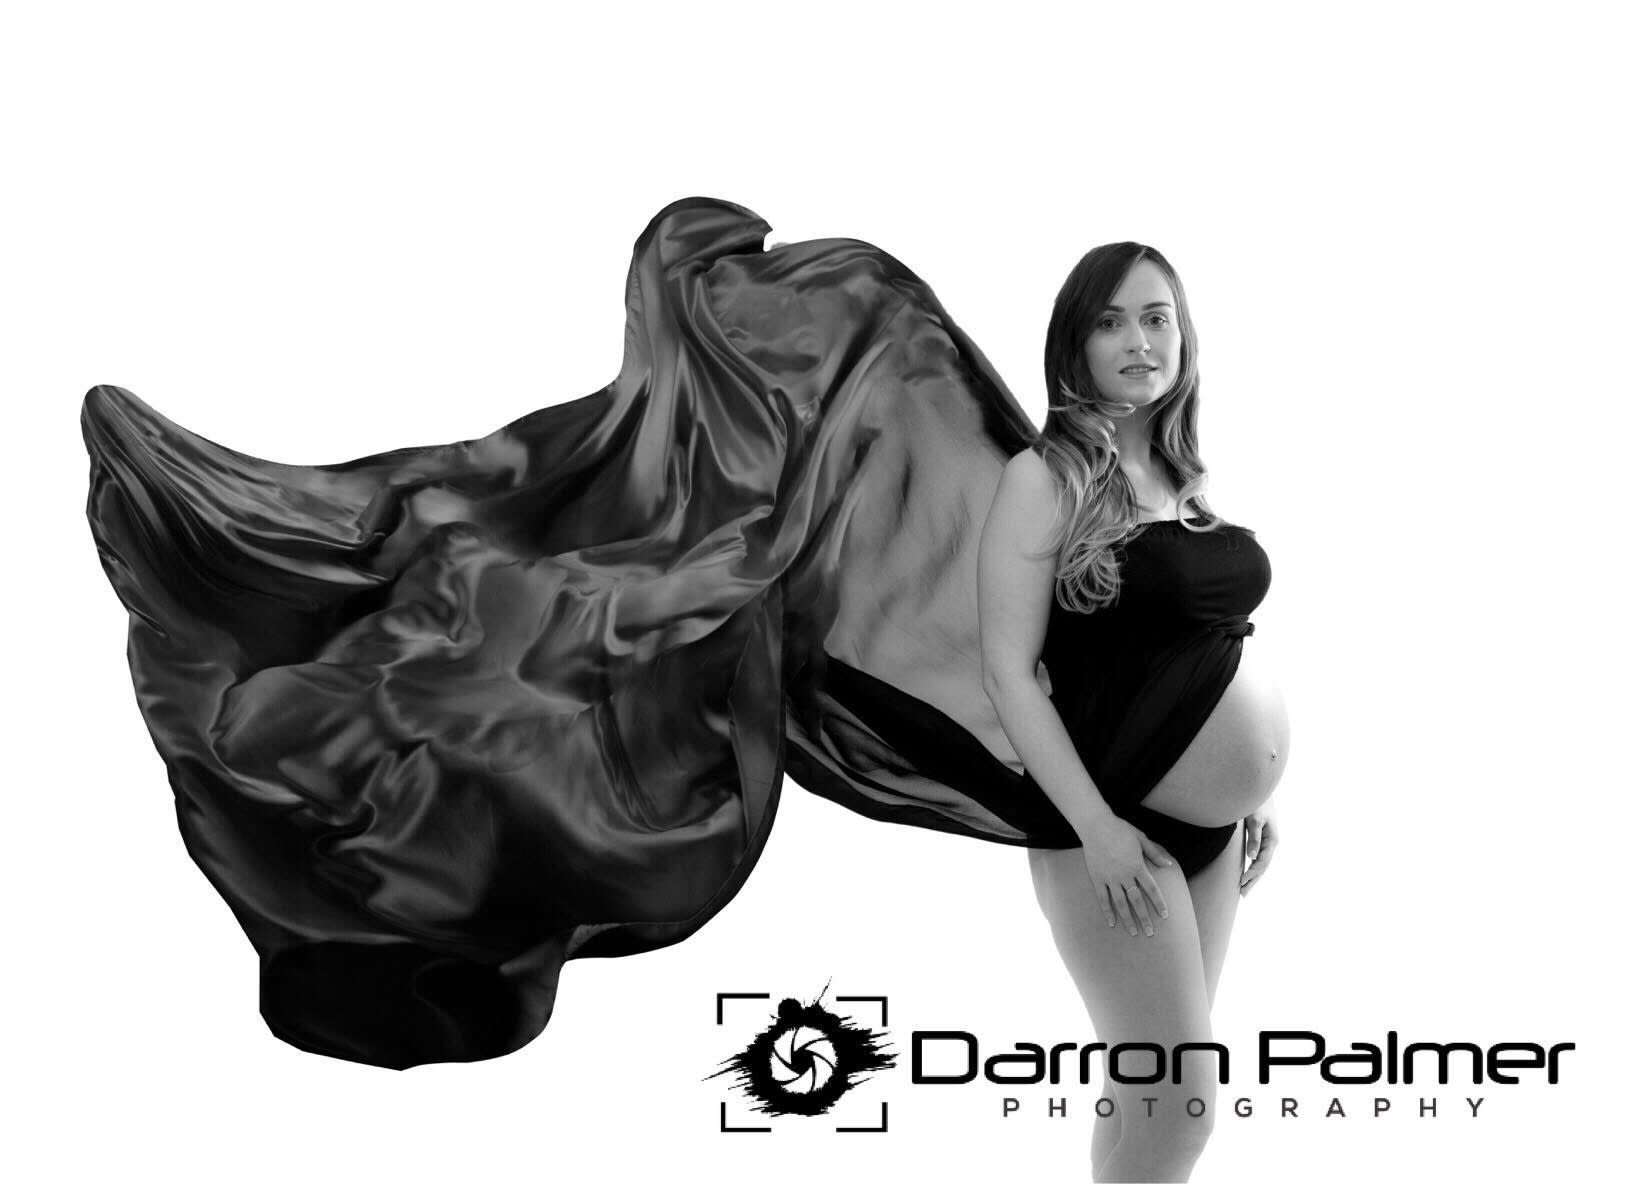 Images Darron Palmer Photography